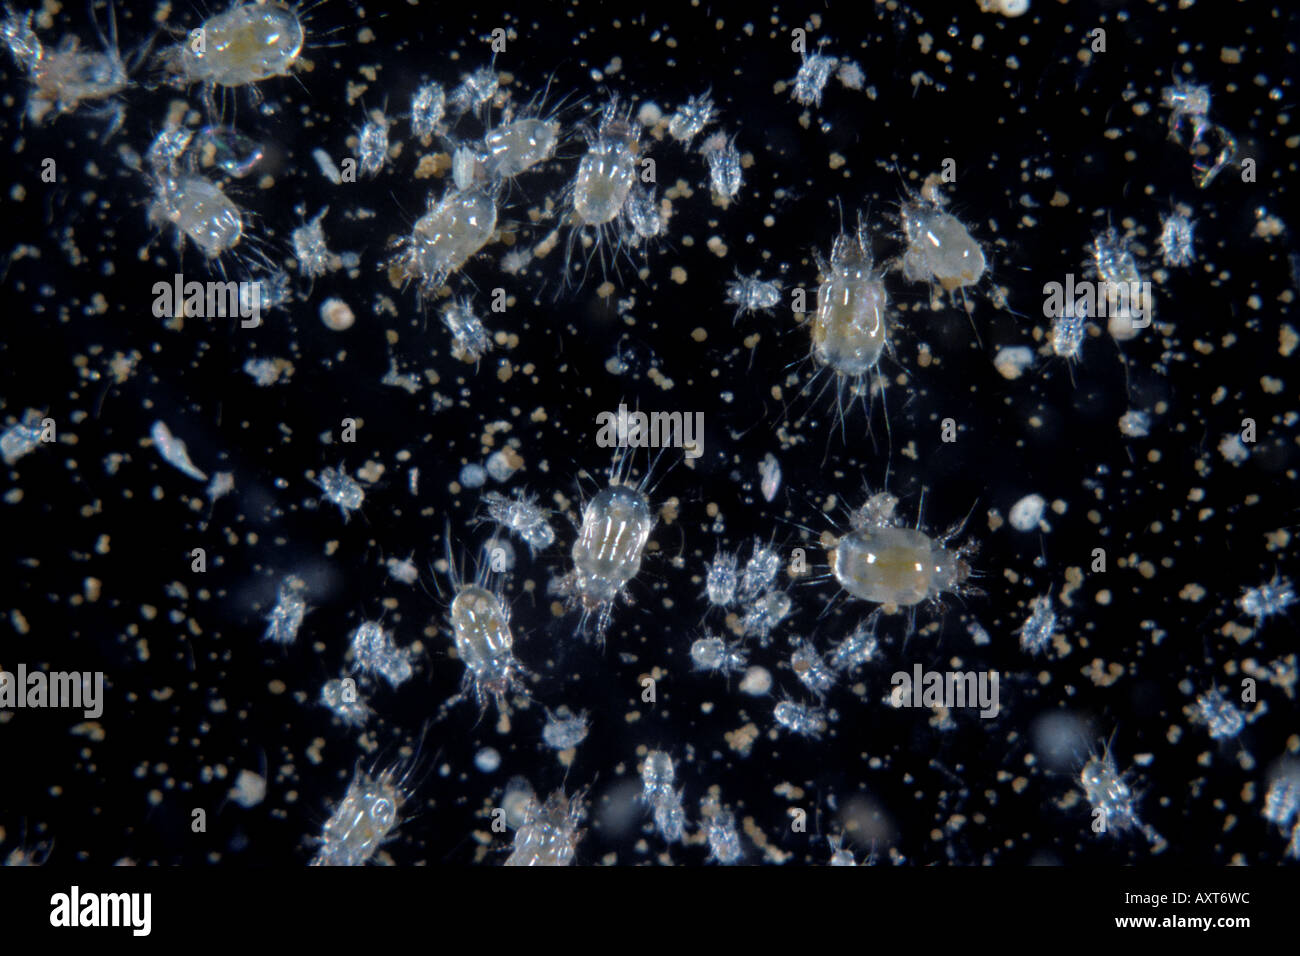 Grain mite Tyrophagus putrescentiae mites on a black background Stock Photo